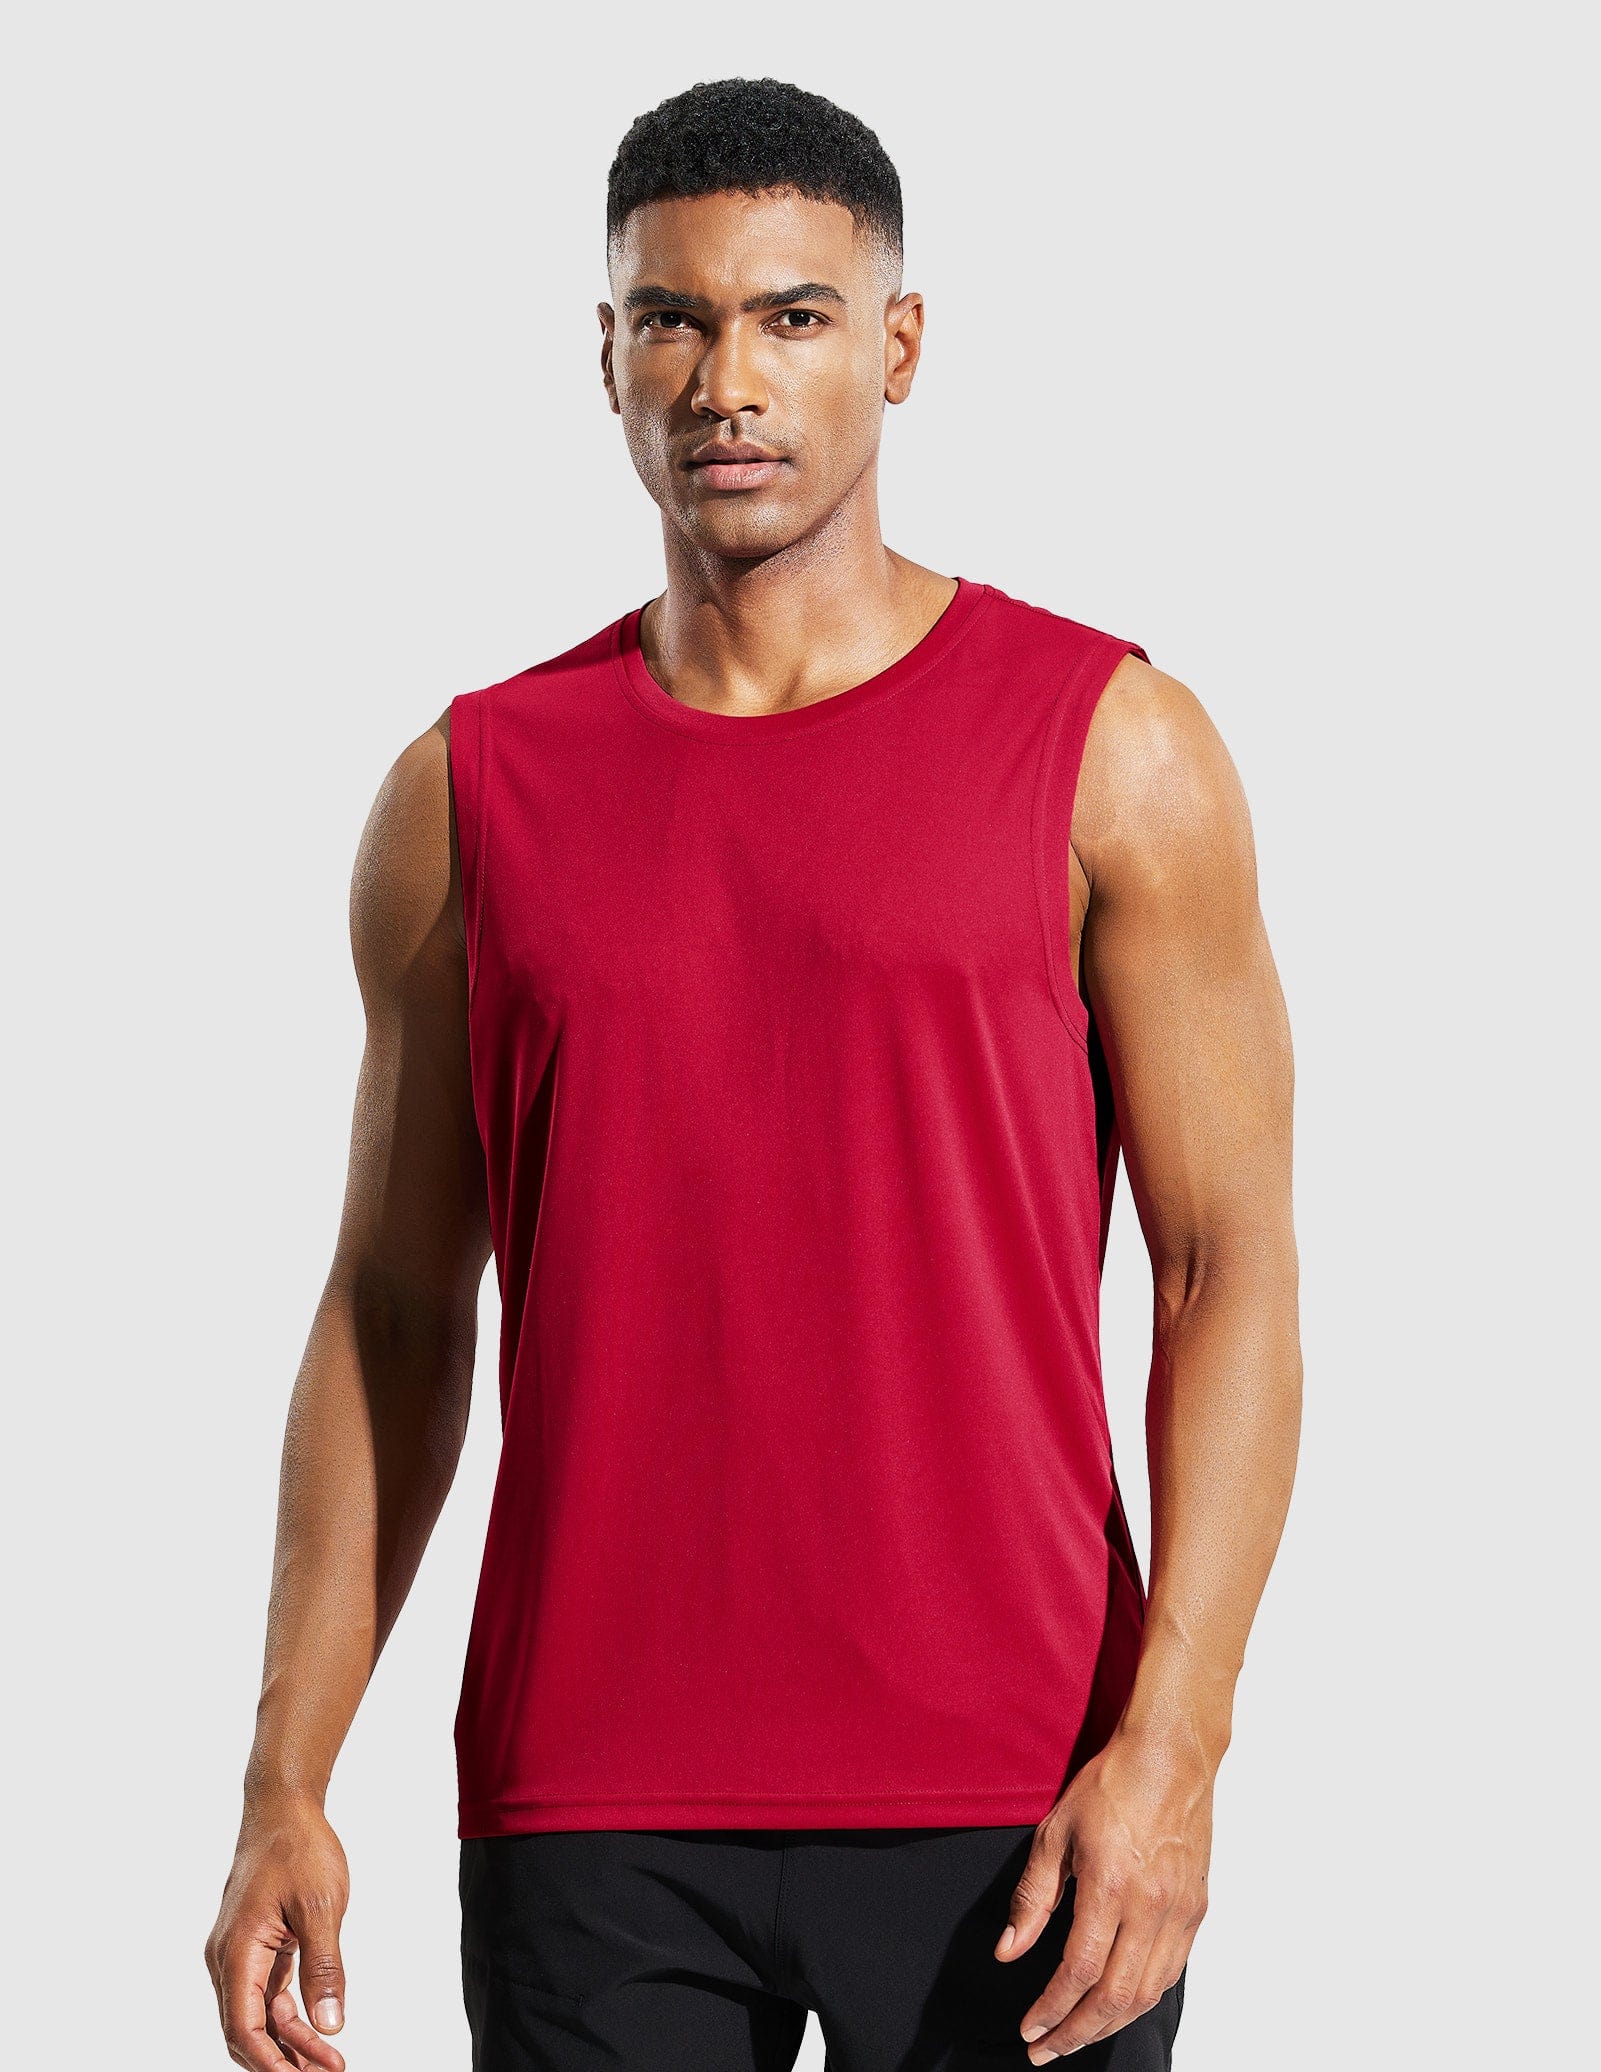 Men's Lightweight UPF 50+ Sun Shirts Quick Dry Tank Tops Men's Tank Top Red / S MIER